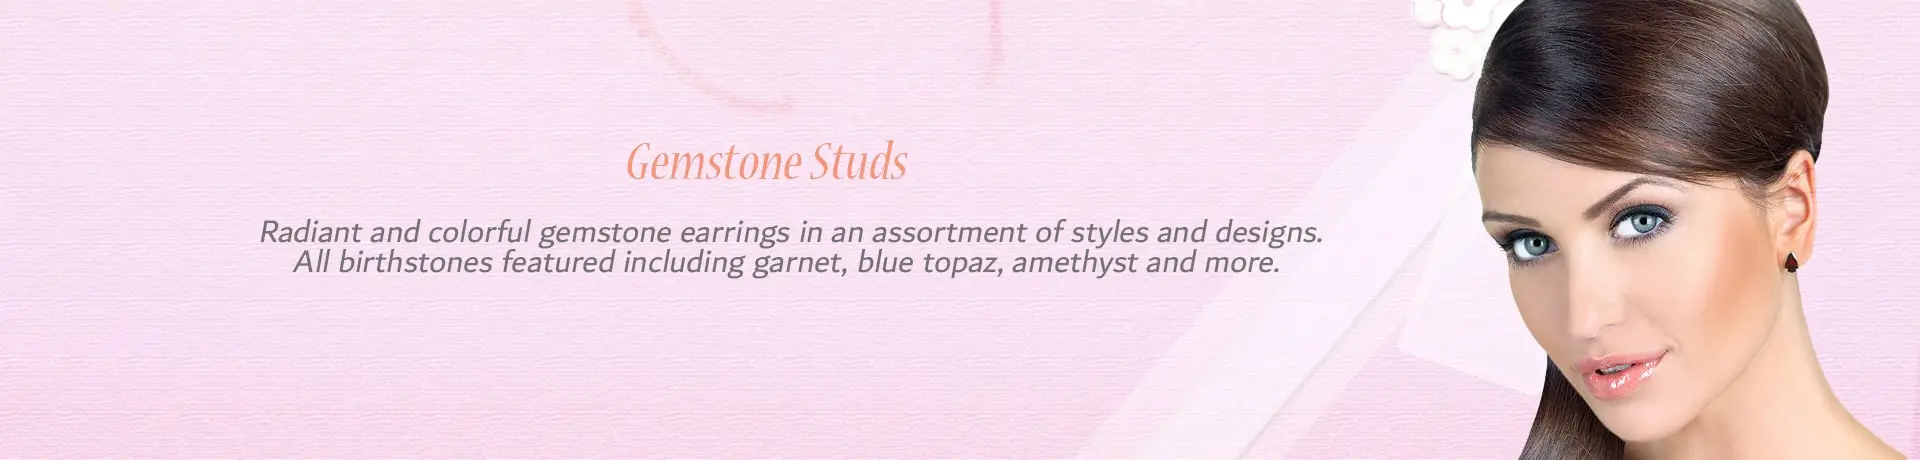 Category Gemstone Stud